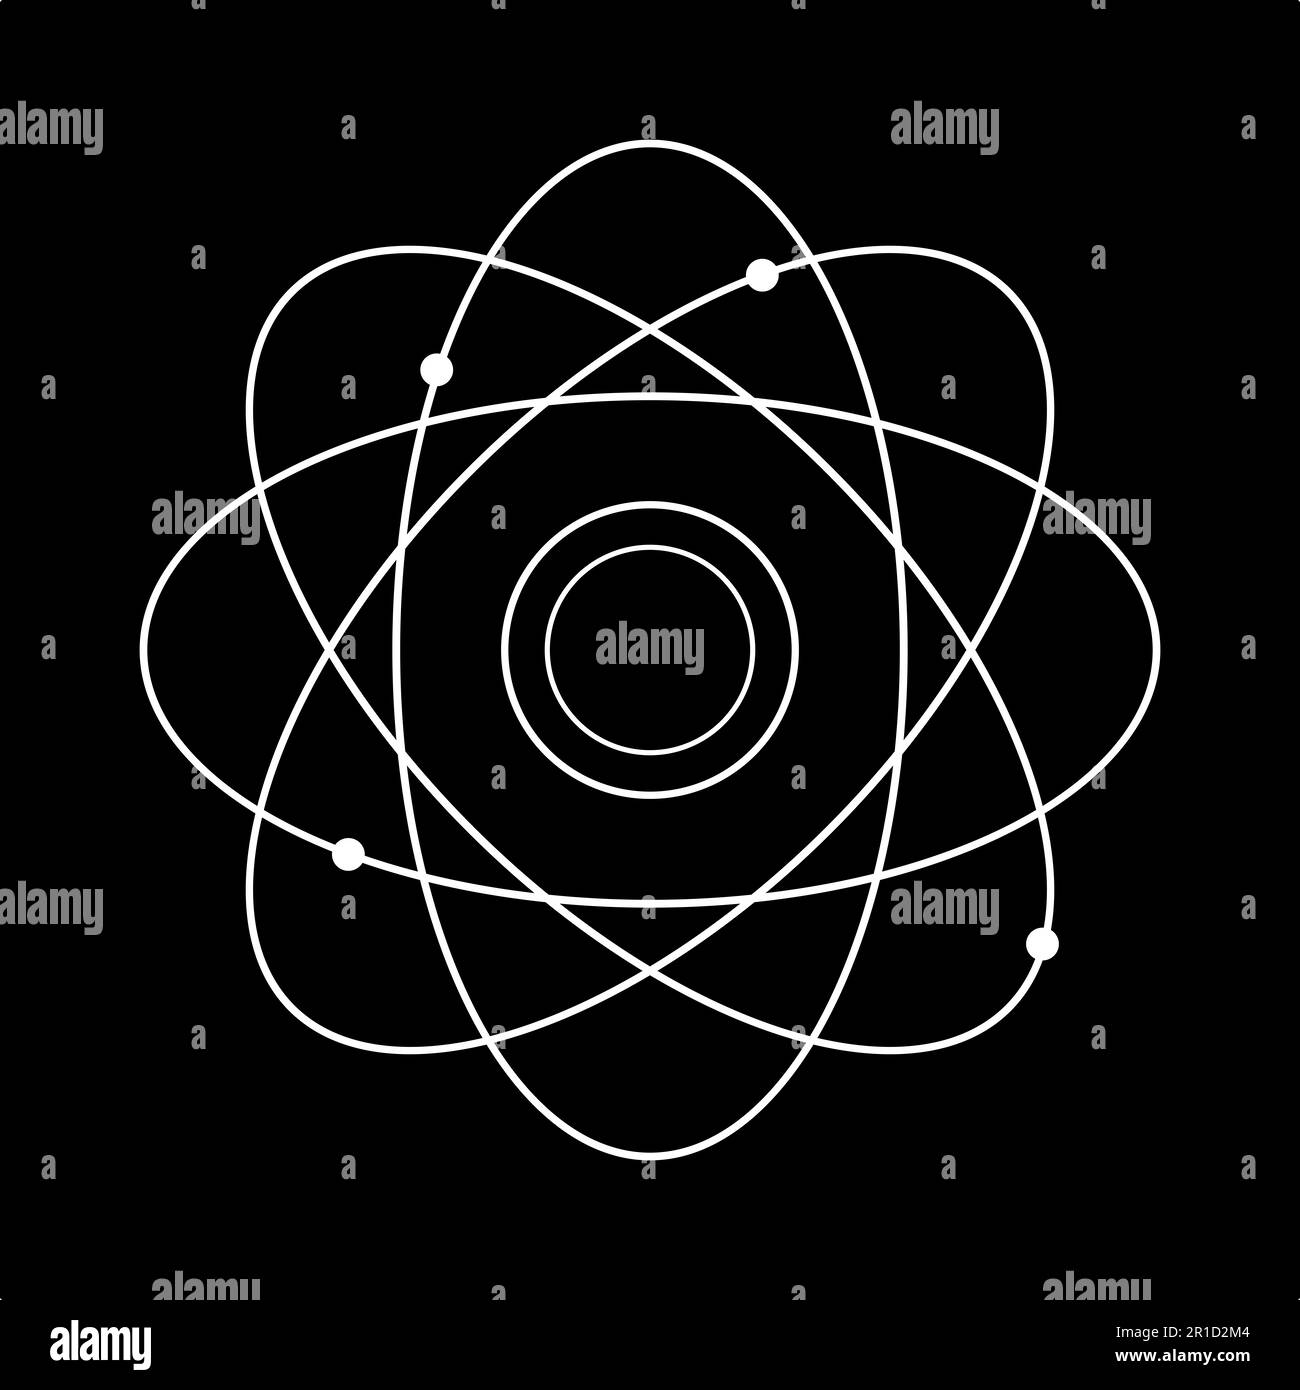 Atomic nucleus sign symbol. atom icon in black and white. Stock Photo